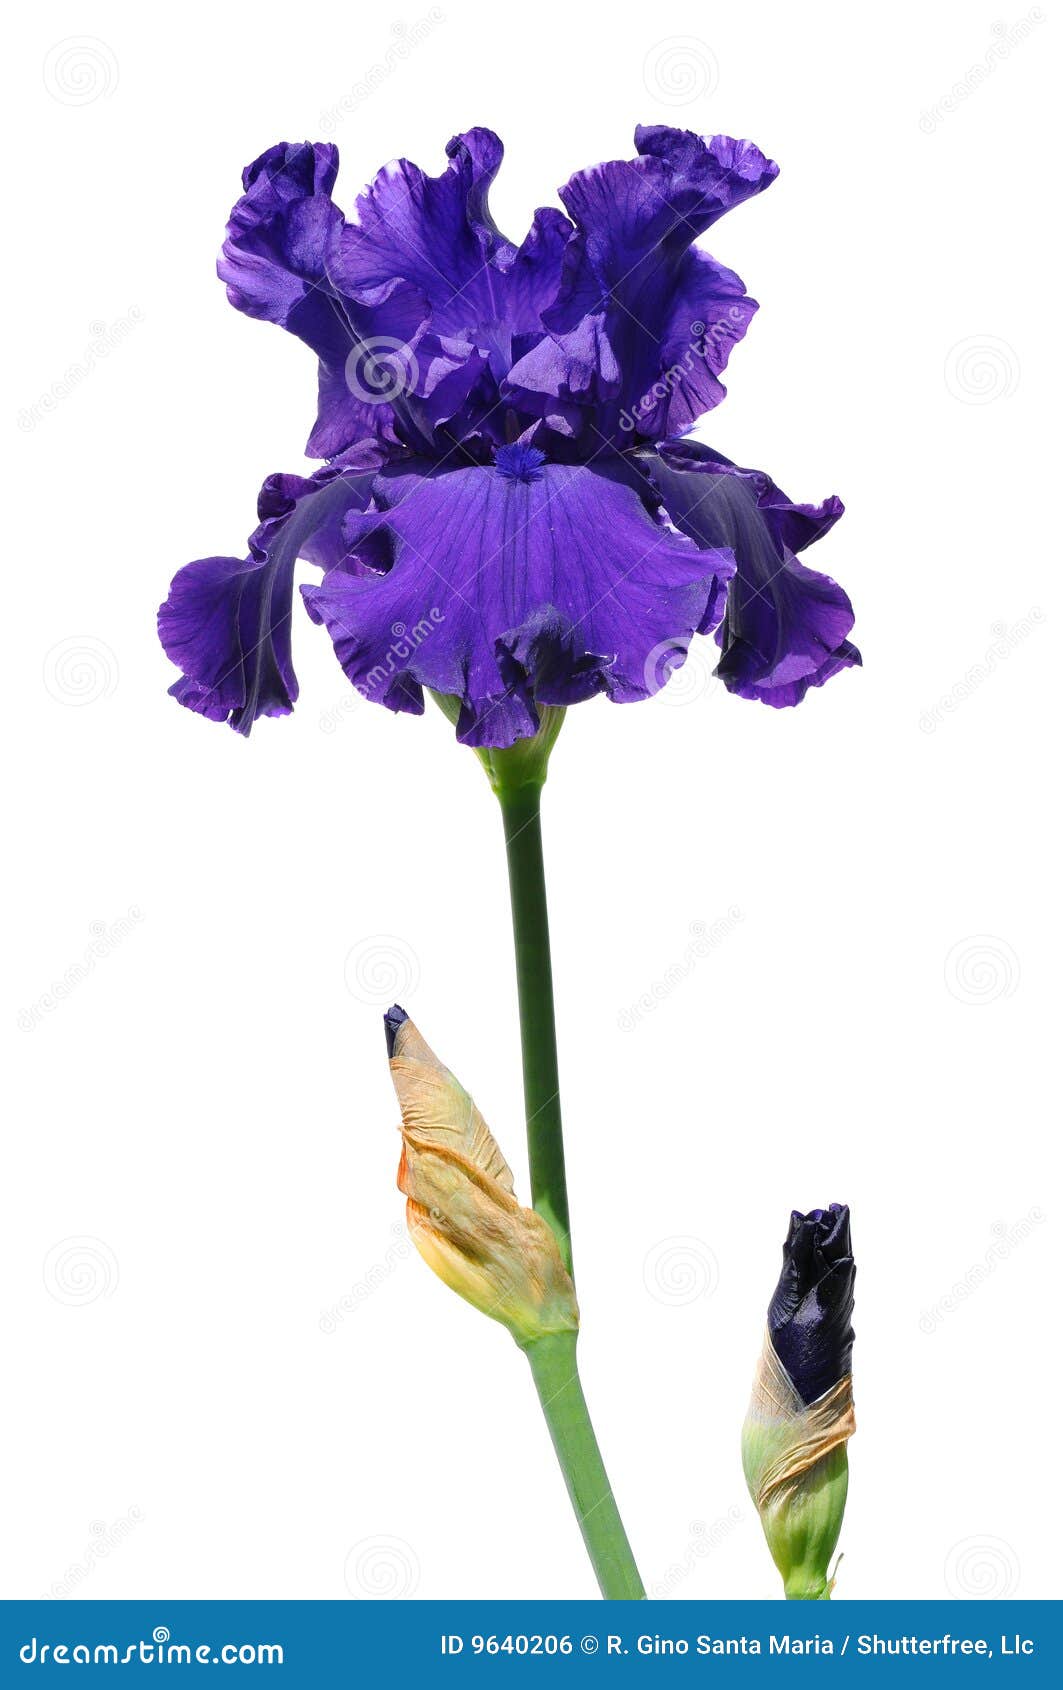 20,20 Iris Flower Photos   Free & Royalty Free Stock Photos from ...